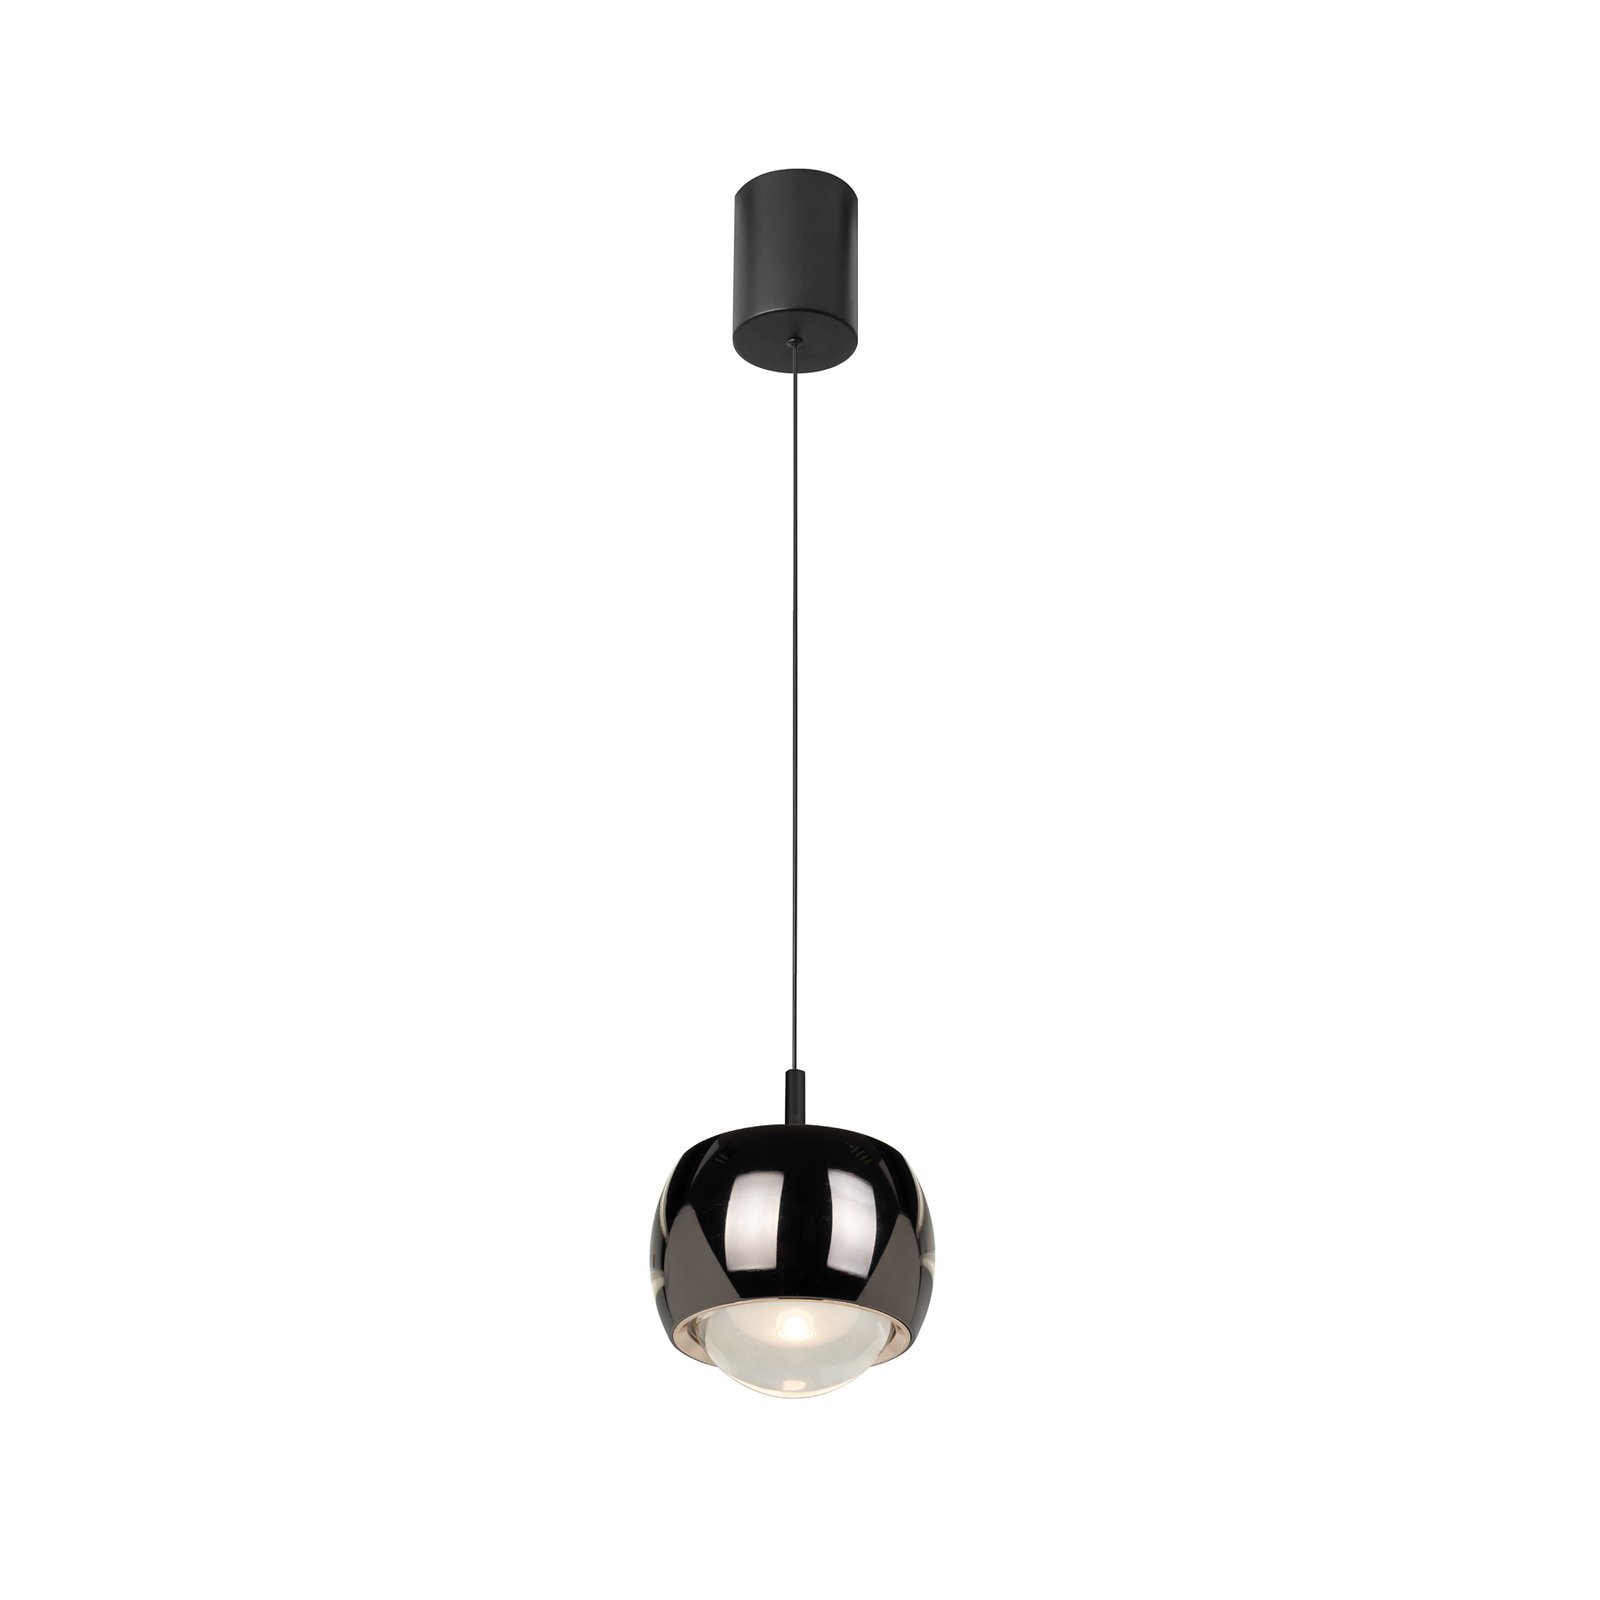 Hængelampe Roller, sort-krom justerbar glaslinse